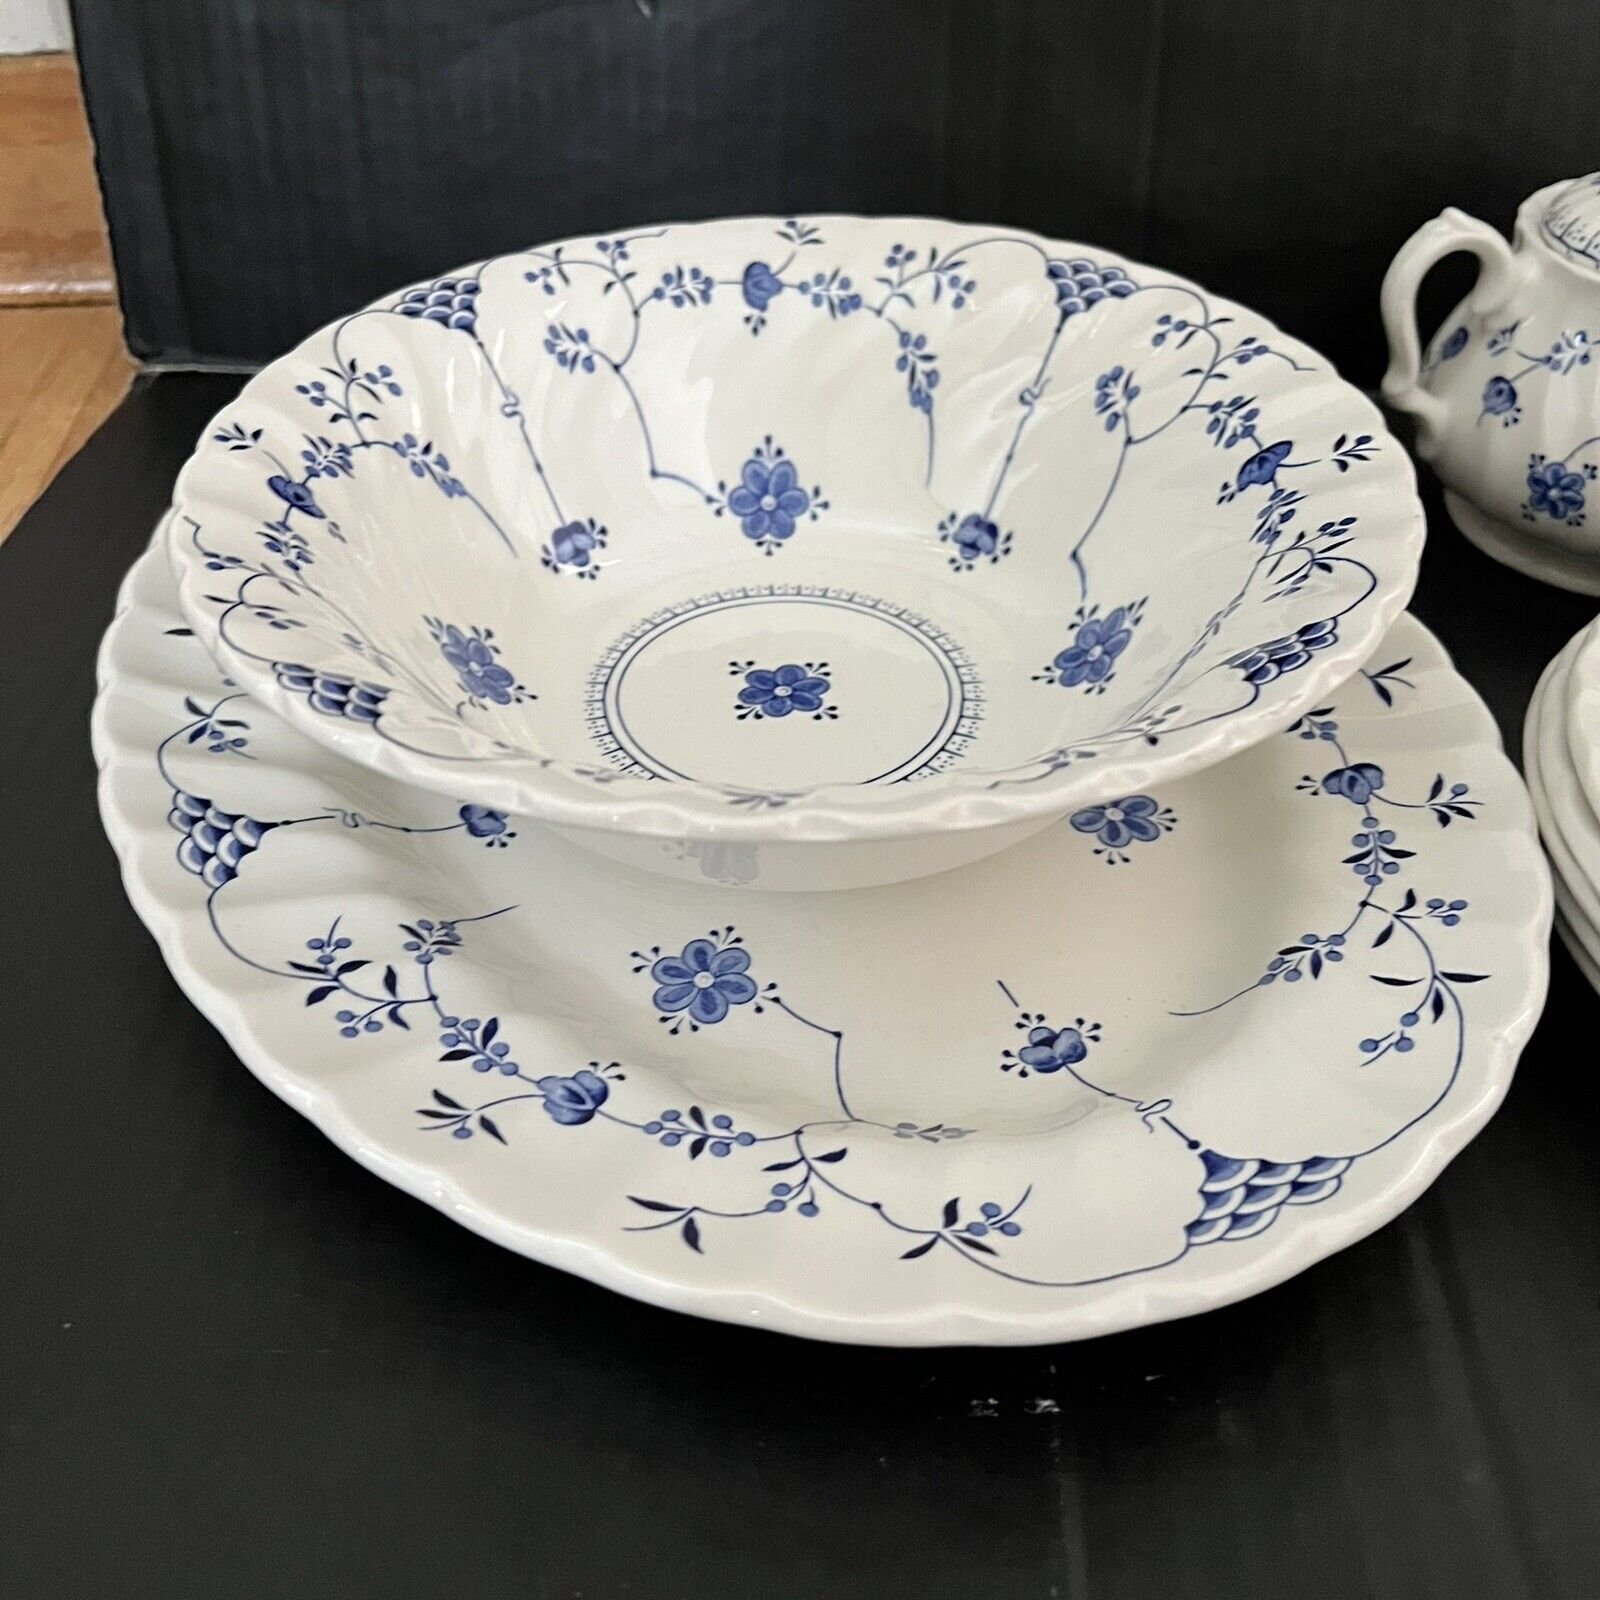 MYOTT STAFFORDSHIRE FINLANDIA TABLE WEAR TEA DINNER SET blue White CHINA 40 pcs dYG2vm4iM